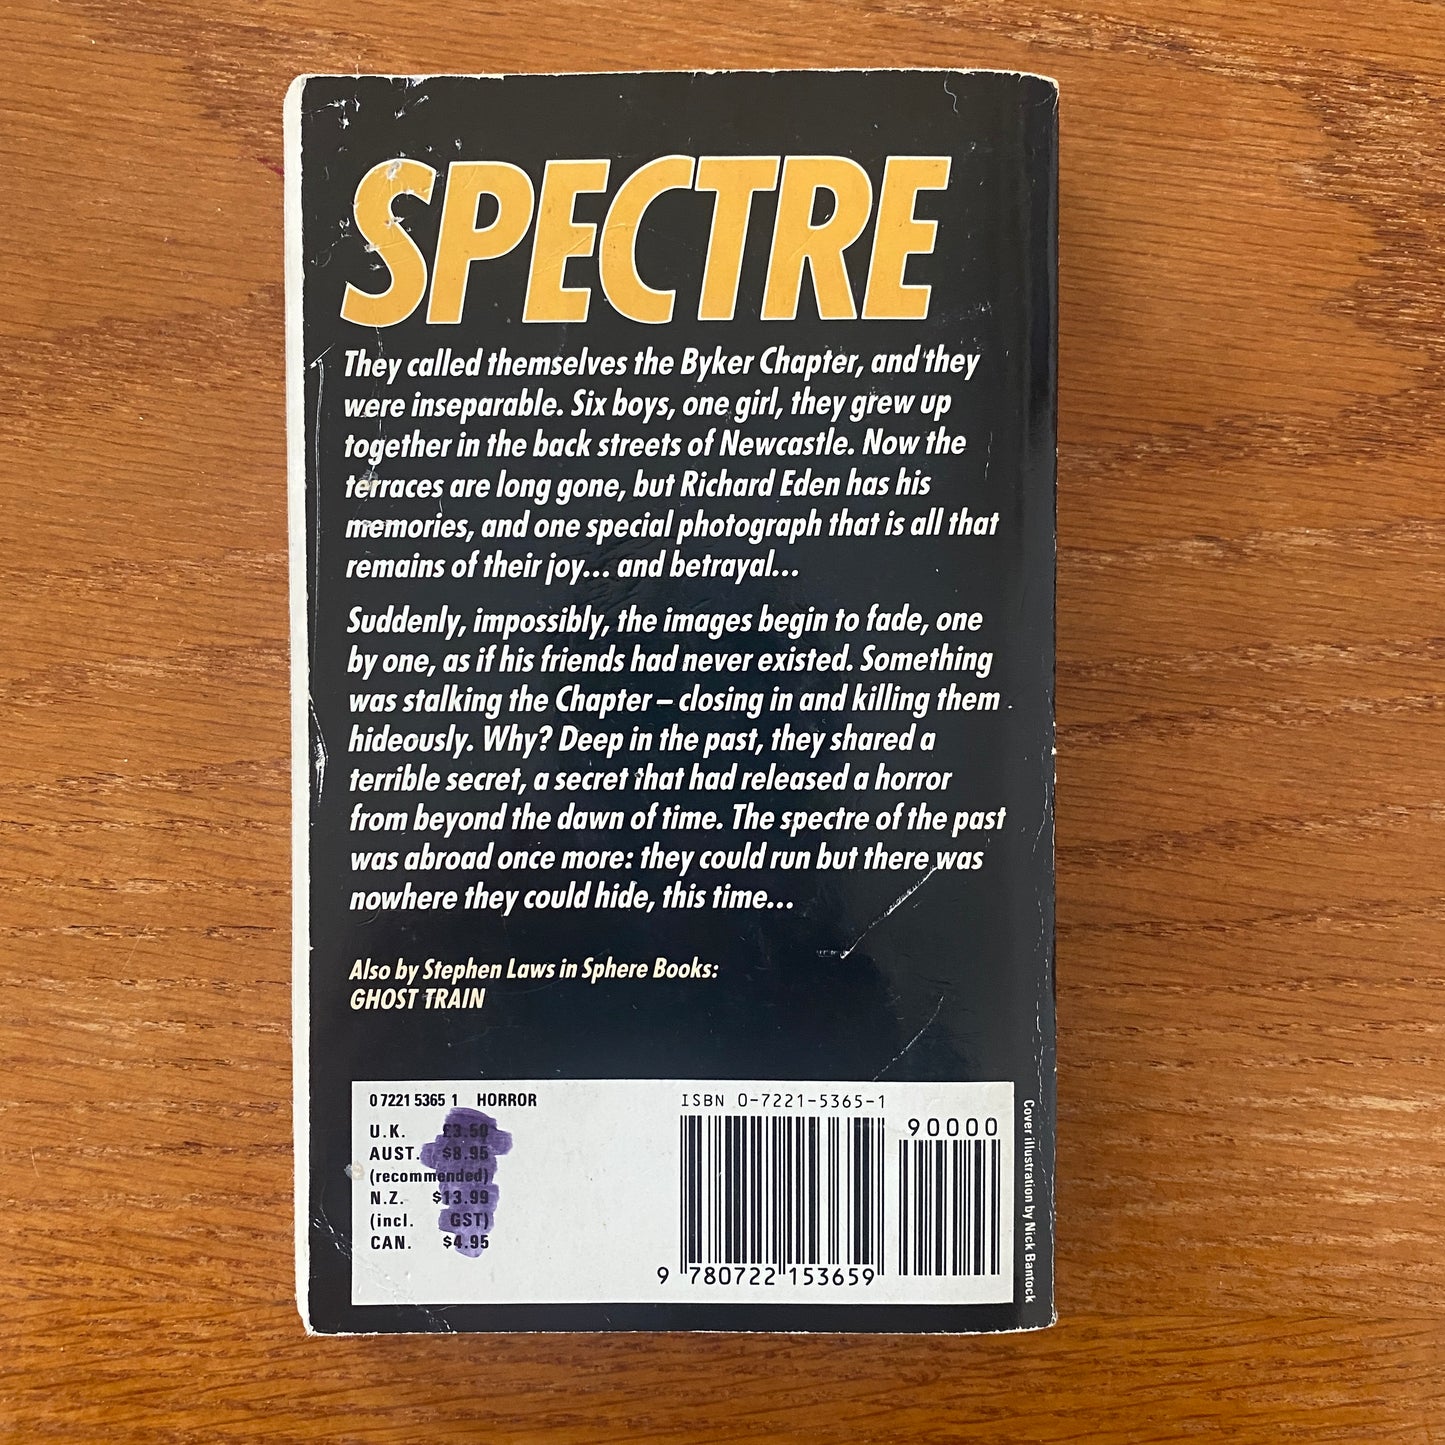 Spectre - Stephen Laws